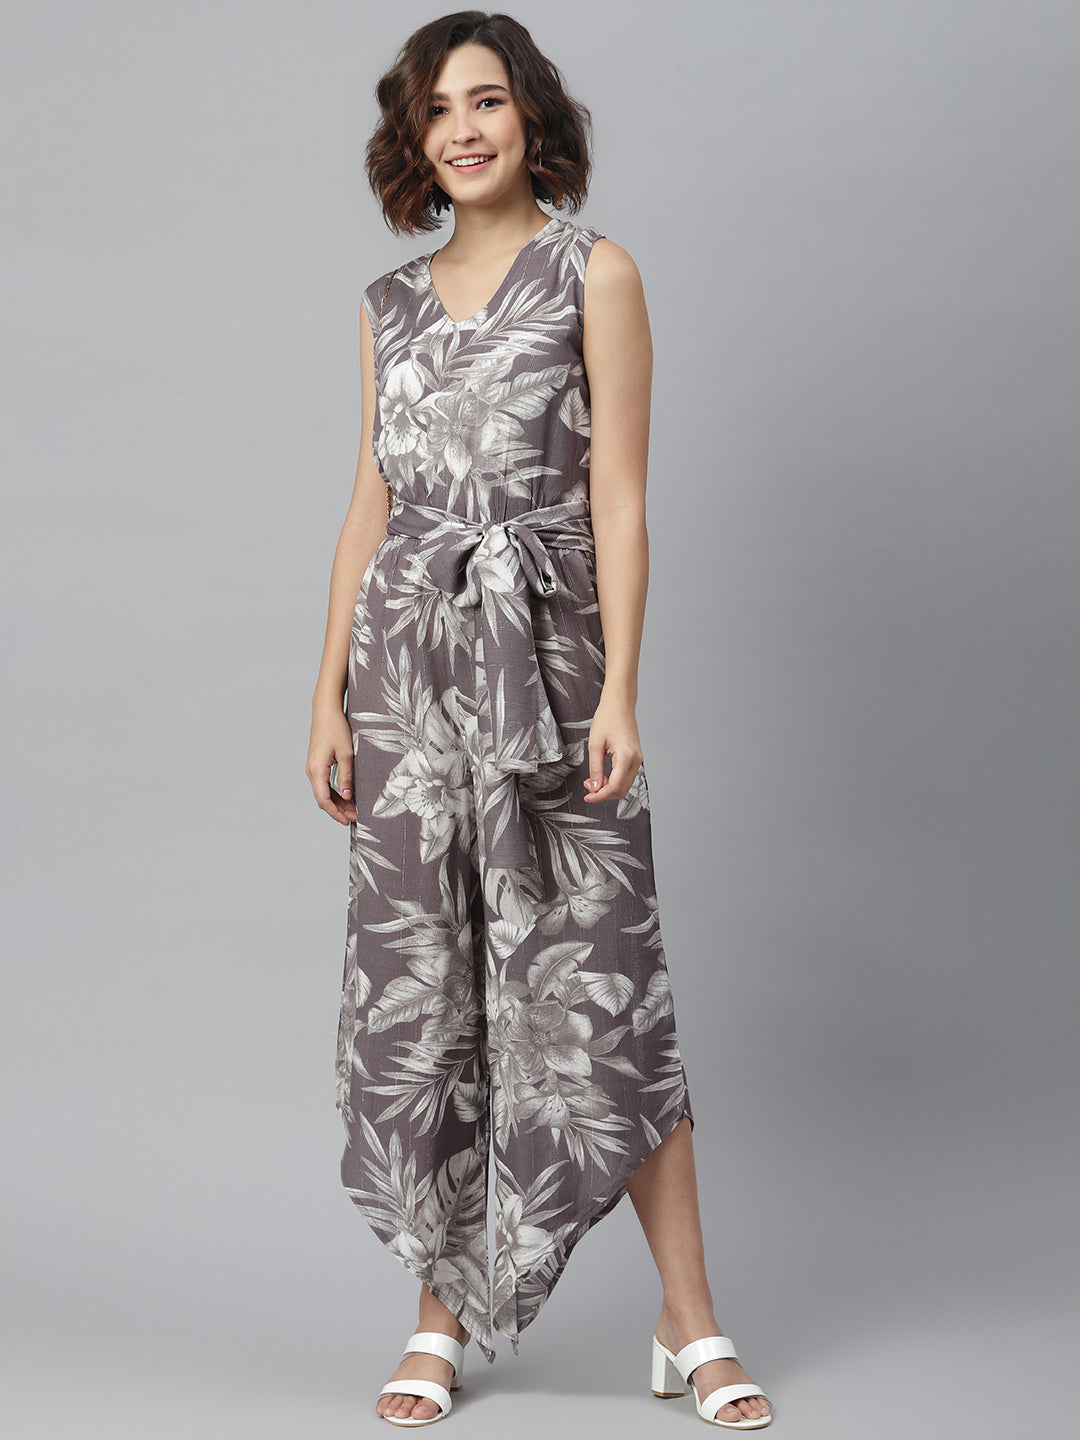 Women's Floral printed Jumpsuit with Asymmetric hemline